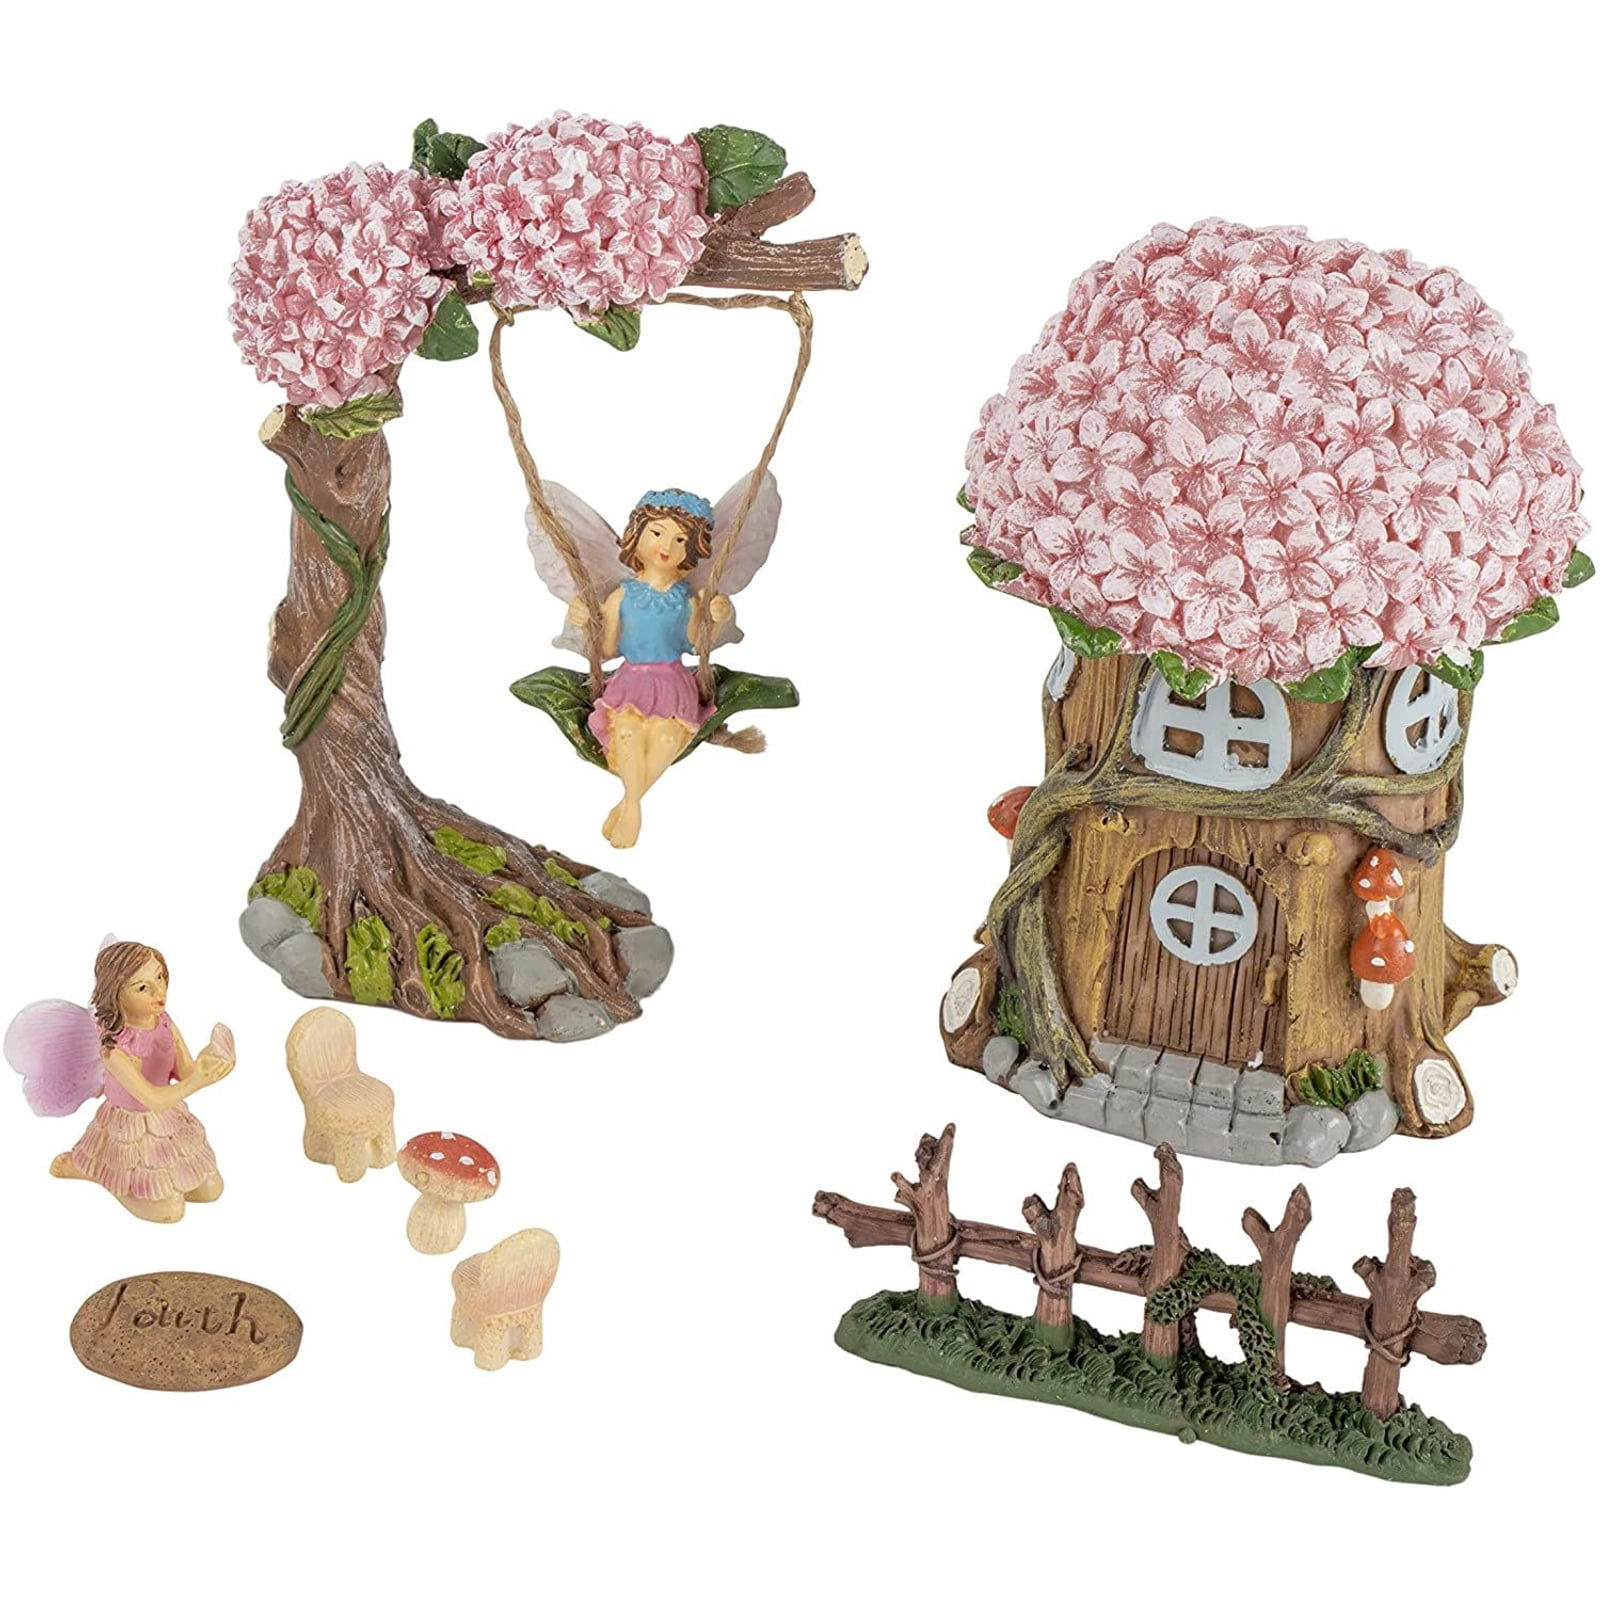 Details about   Little Birds Fairy Garden Decor  Miniature Figurines Micro Landscape+